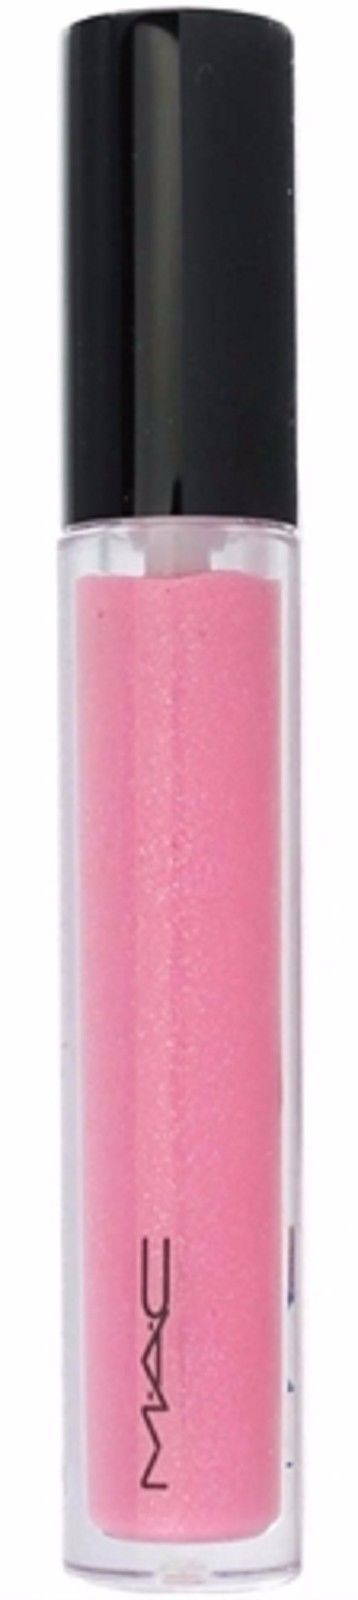 MAC Dazzleglass Creme Lip Gloss (My Favourite Pink) Full Size - FragranceAndBeauty.com